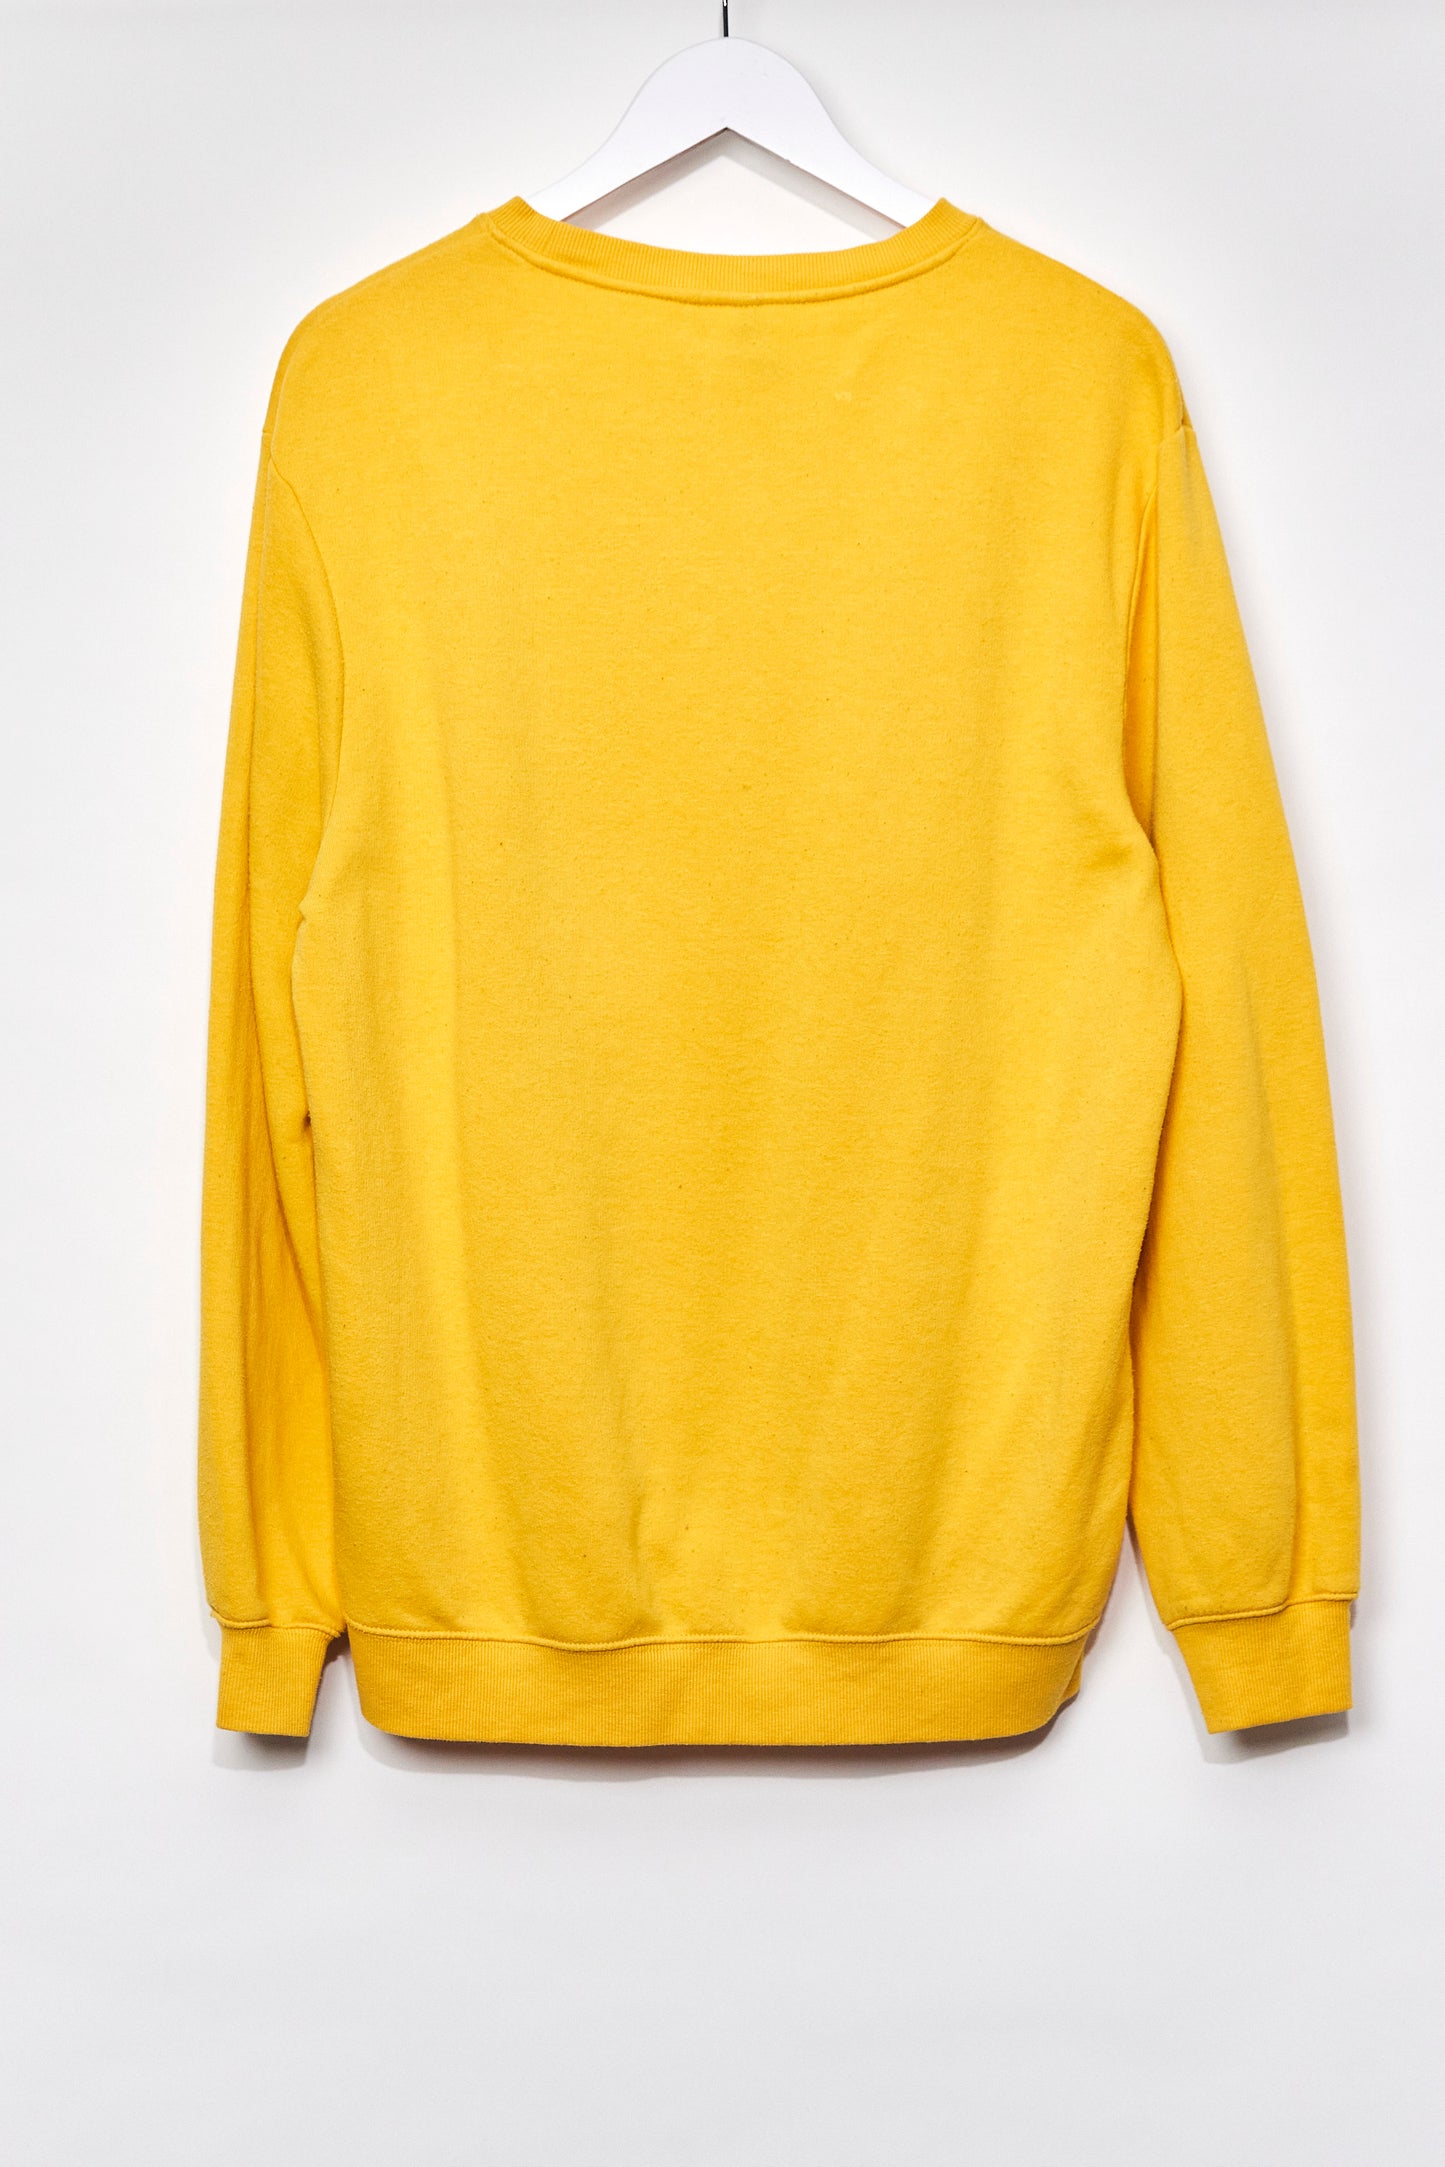 Mens H&M Yellow Sweatshirt size Medium